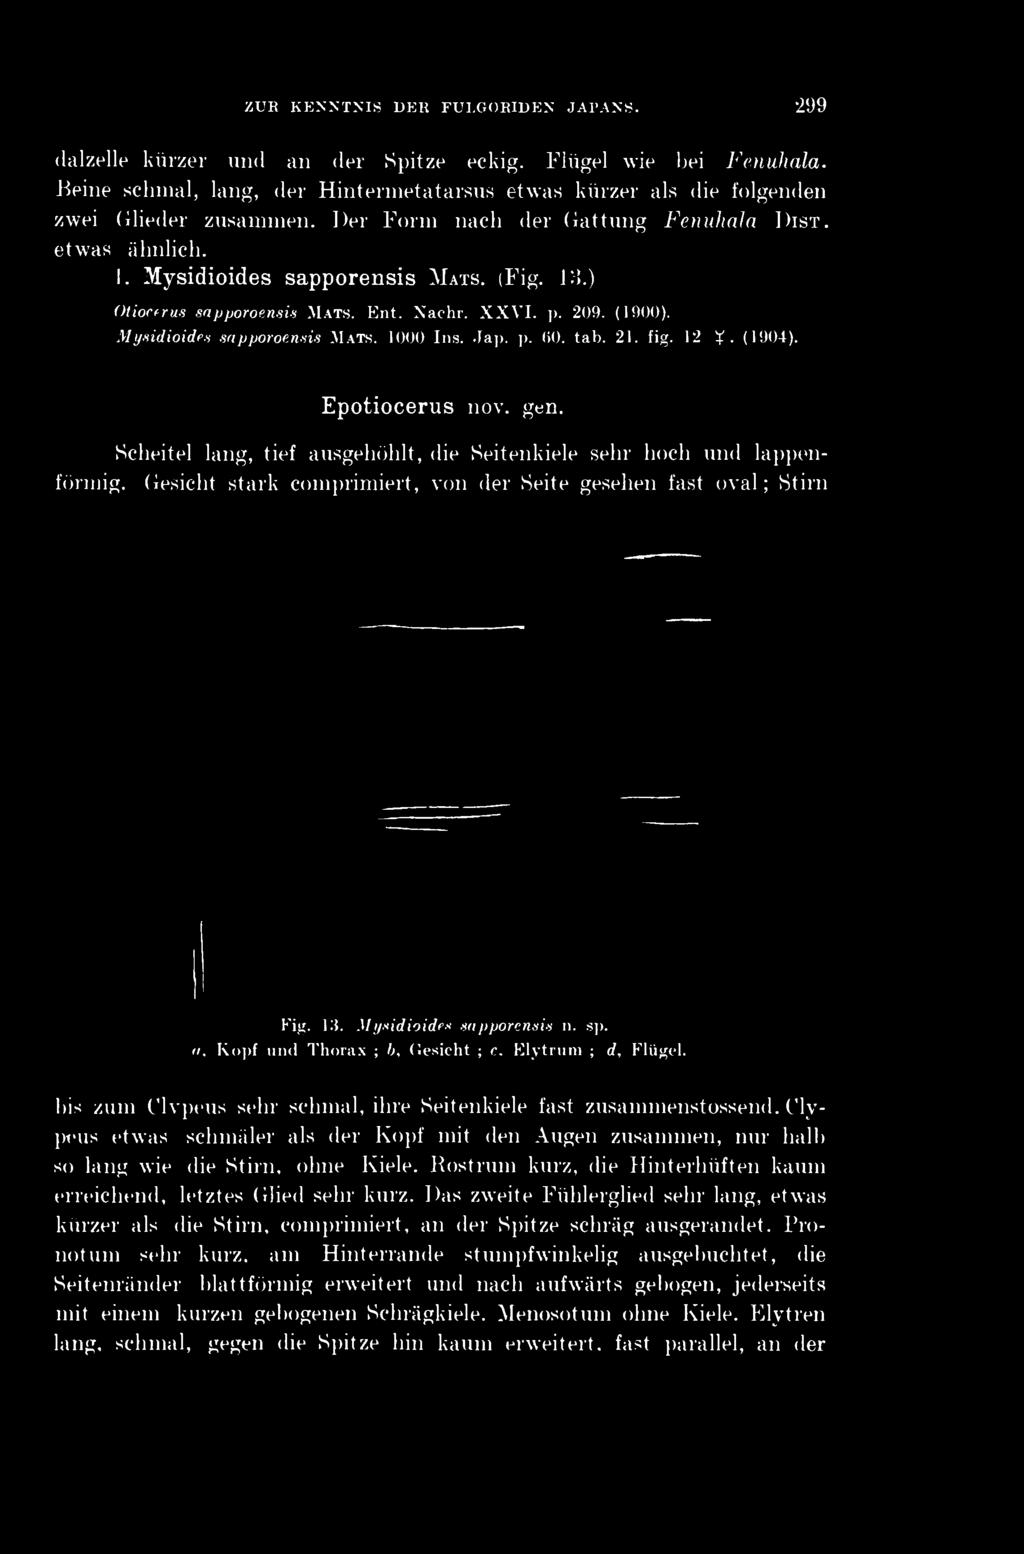 ) Otiocerus sapporoensis MATS. Ent. Nachr. XXVI. p. 209. (1900). Mysidioides sapporoensis MATS. 1000 Ins. Jap. p. 60. tab. 21. fig. 12 (1904). Epotiocerus now gen.